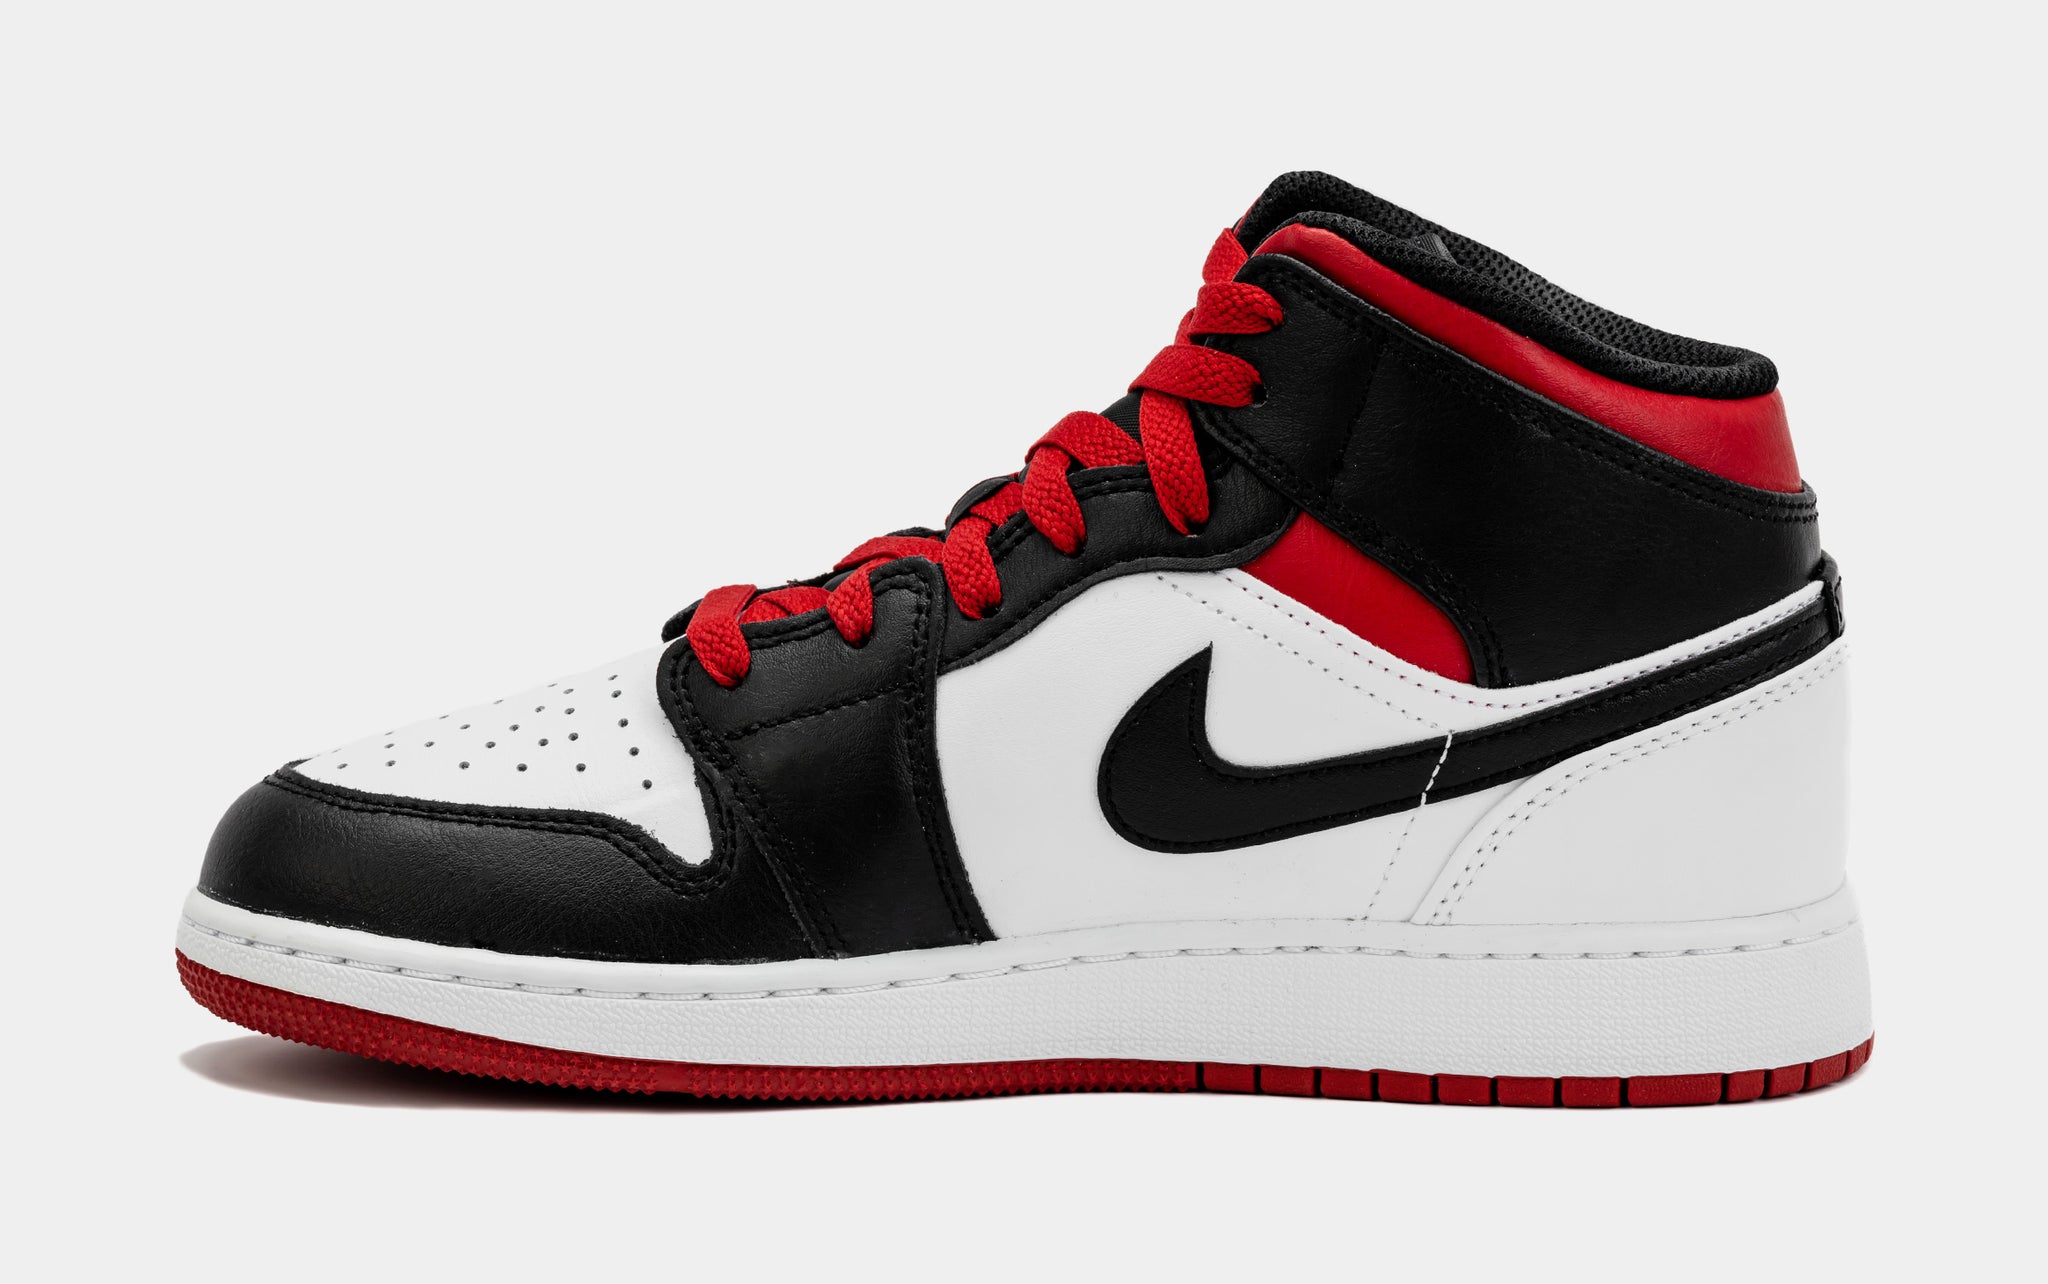 Air Jordan 1 Retro Mid Gym Red Grade School Lifestyle Shoes (Black/Red)  Free Shipping